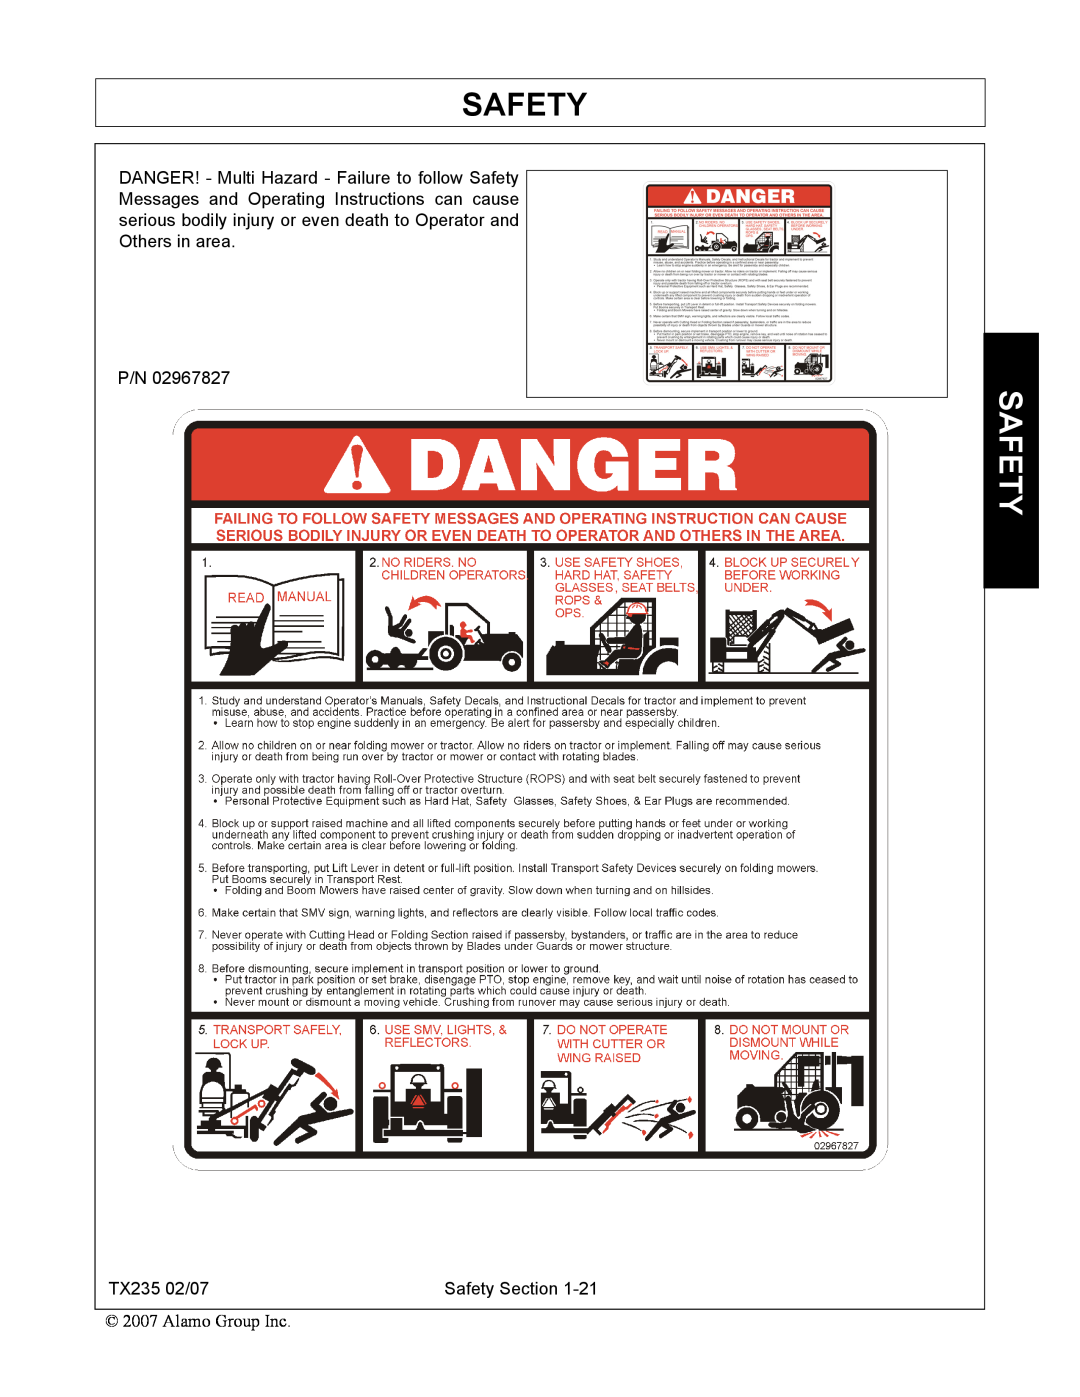 Alamo TX235 manual Safety 